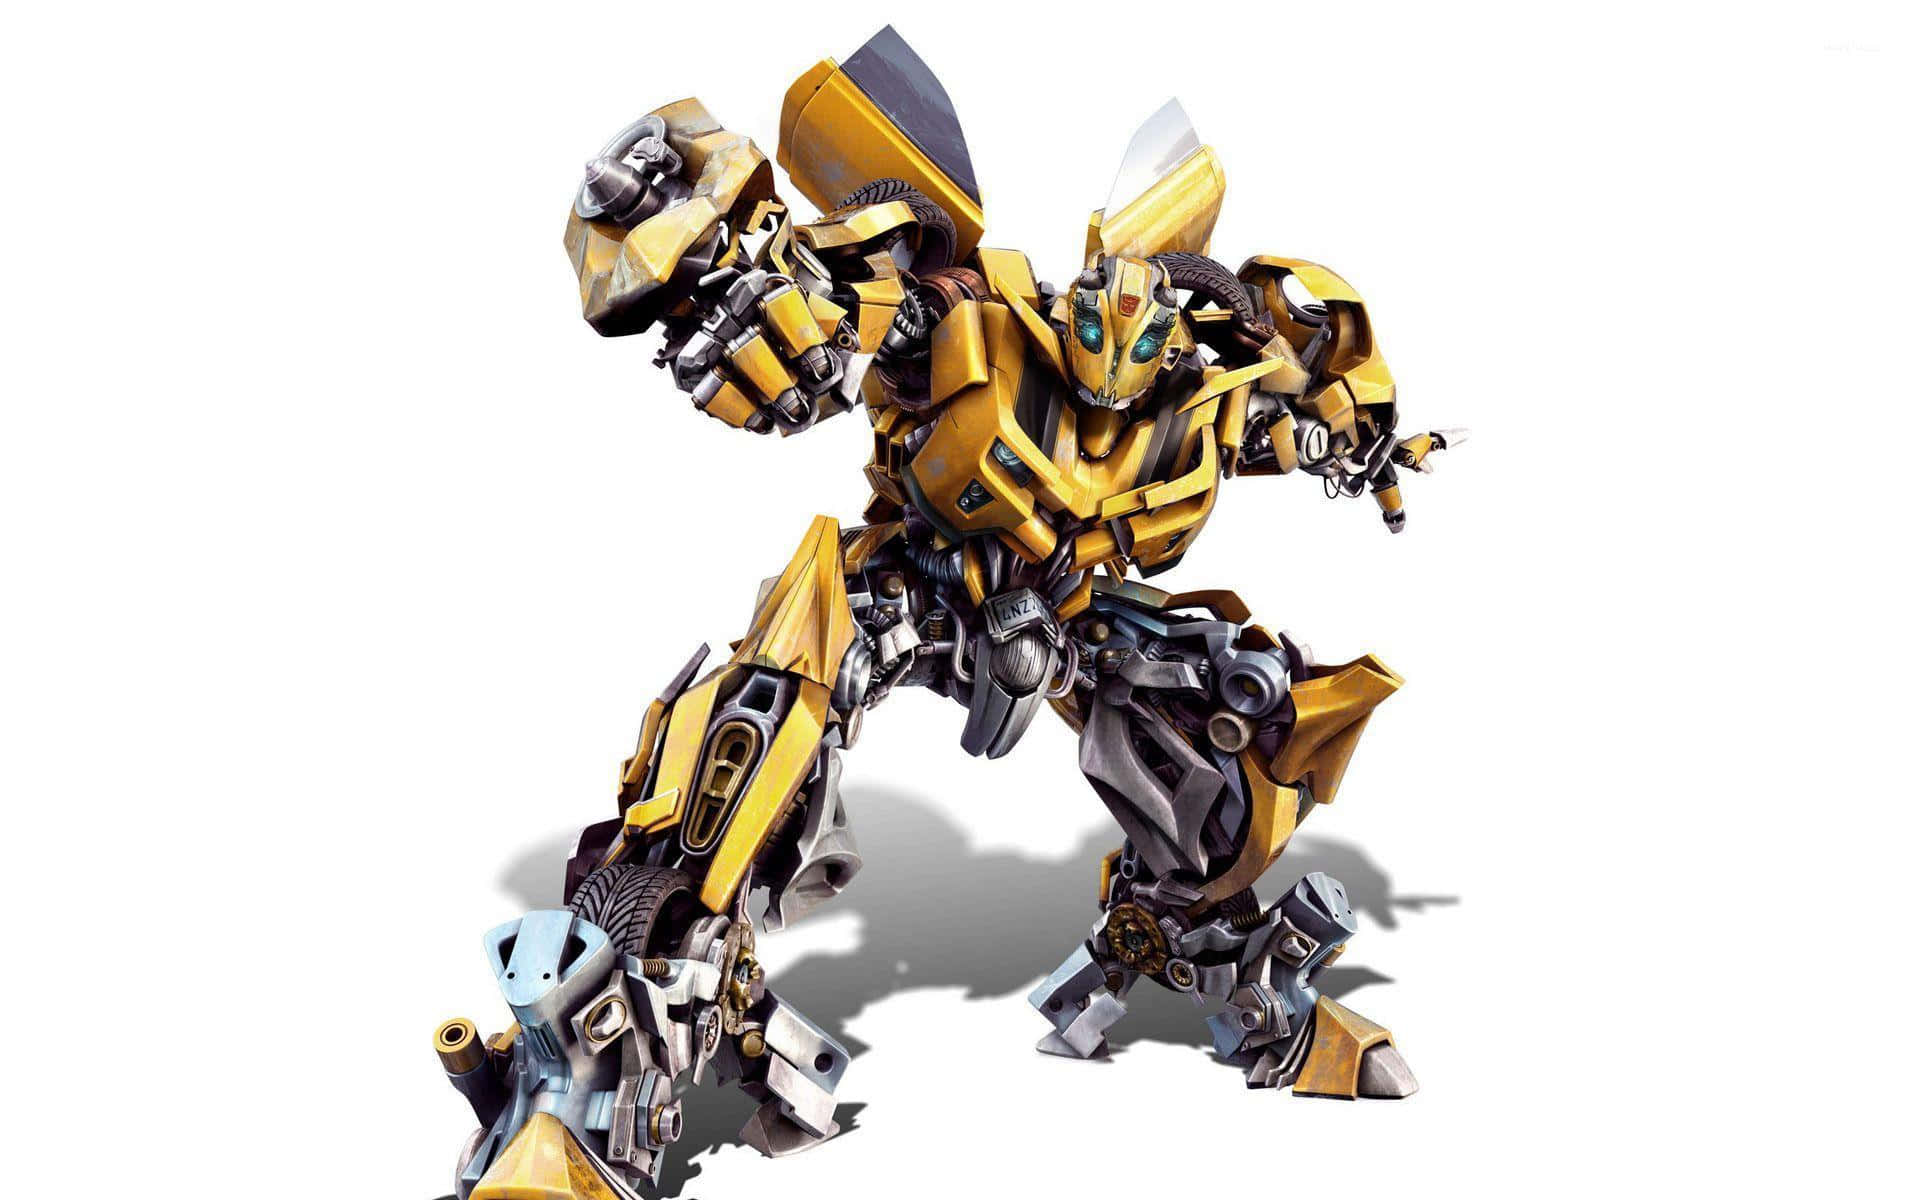 Bumblebee fra Transformers, klar til handling! Wallpaper